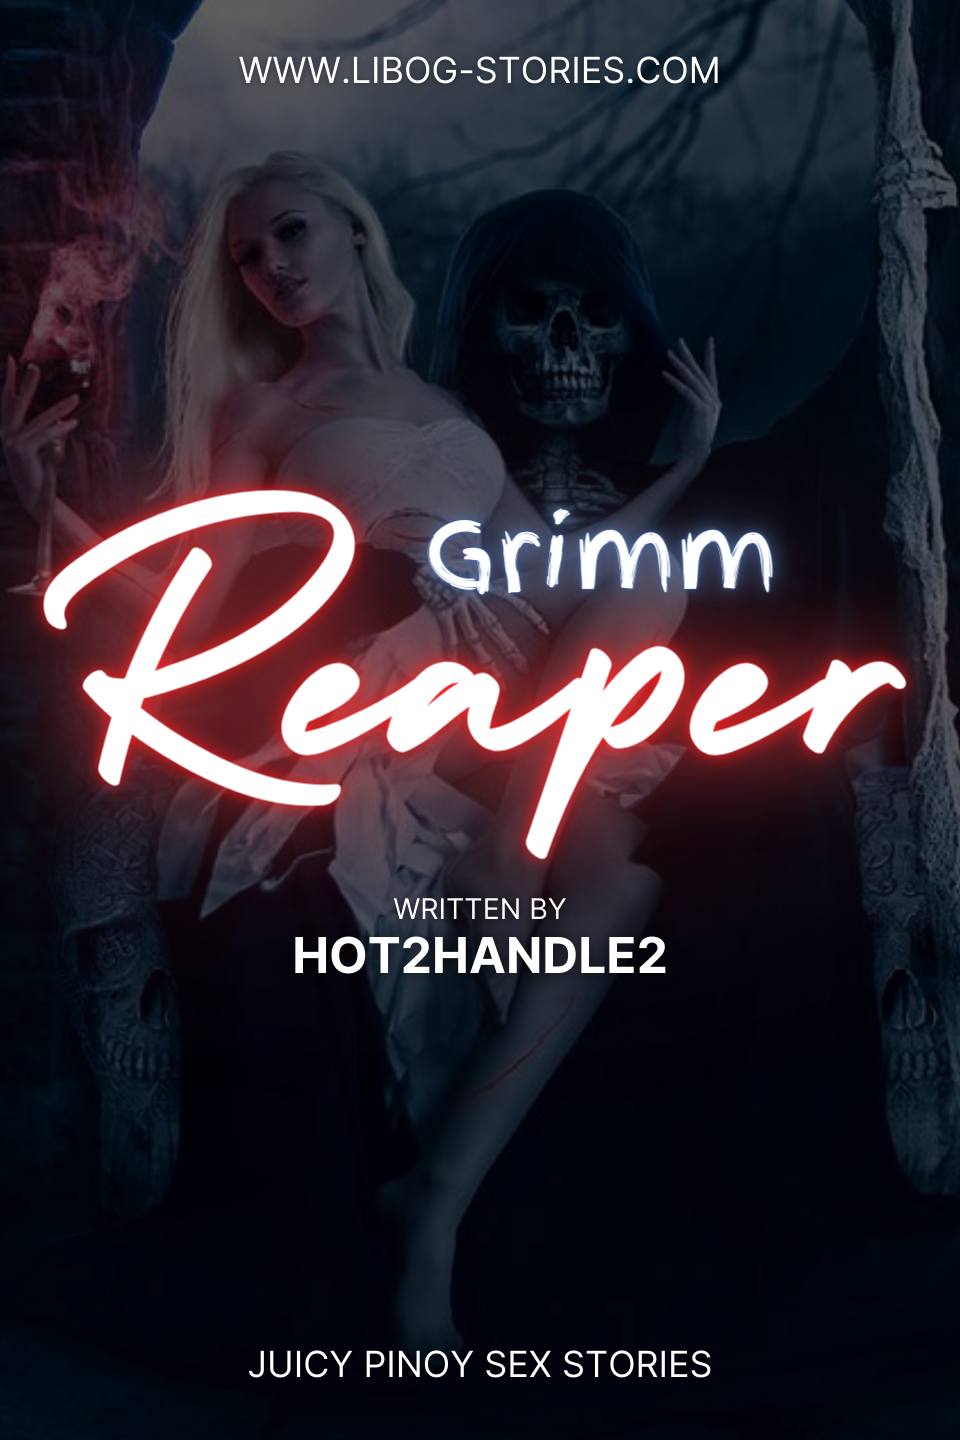 Grimm Reaper